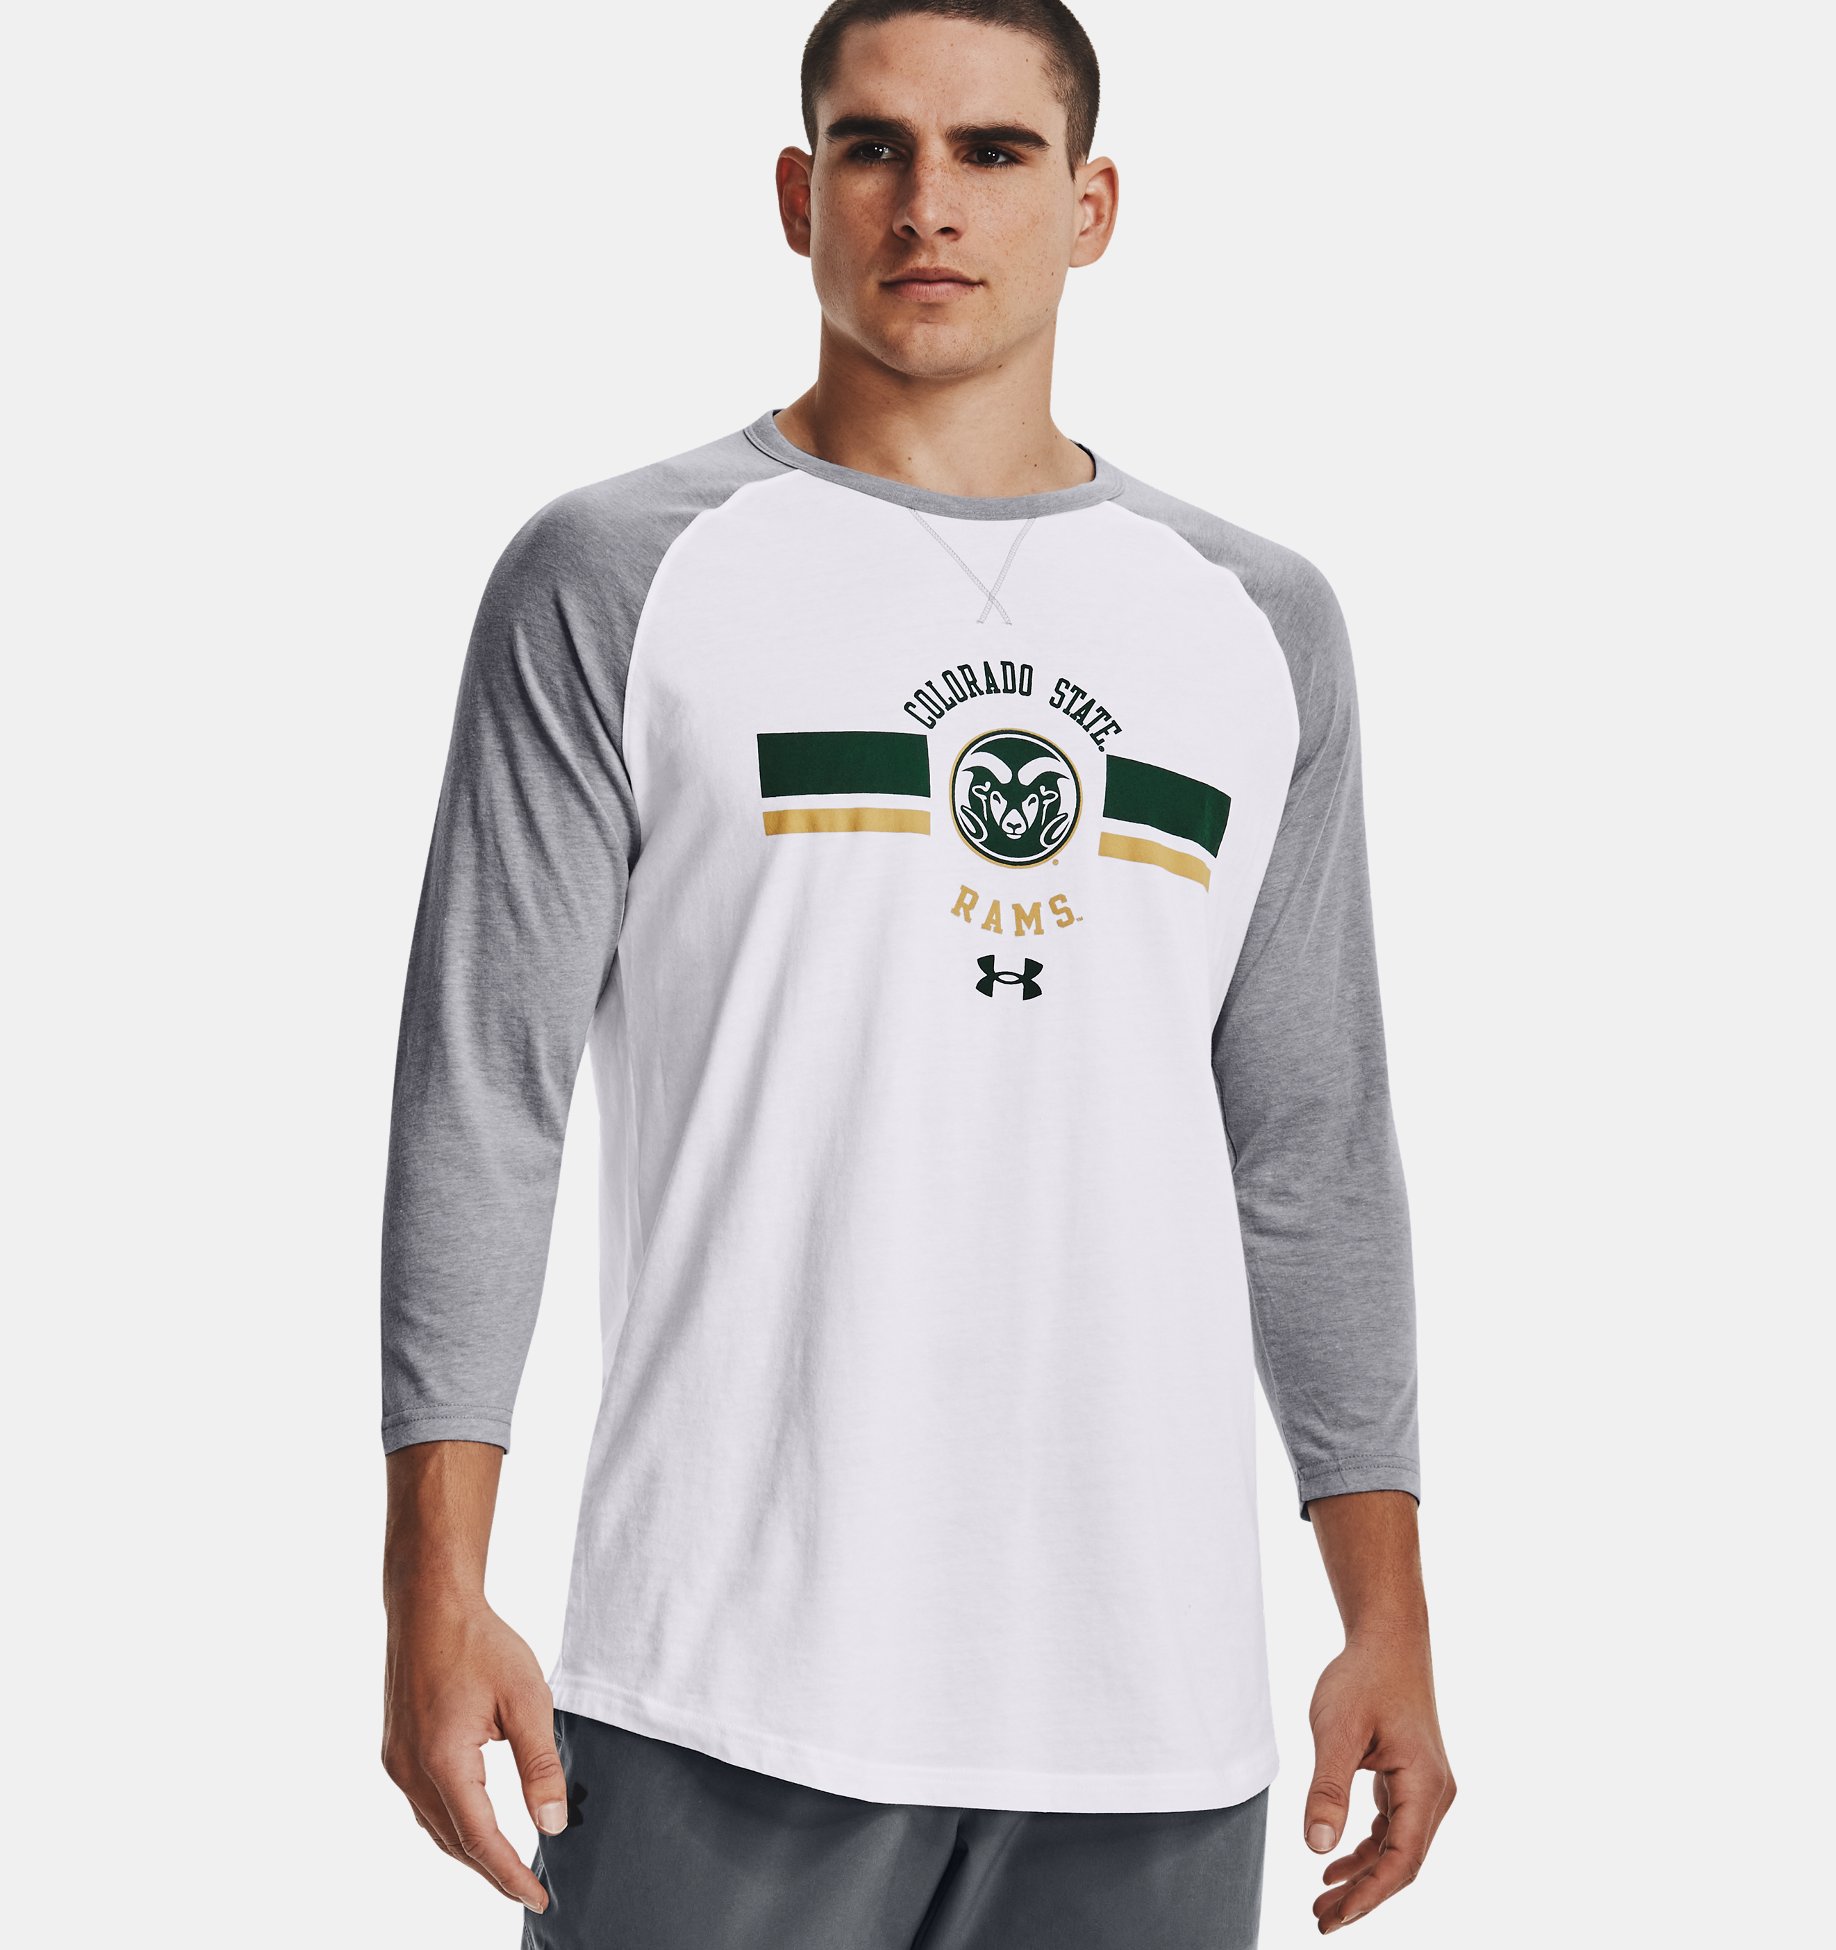 Underarmour Mens UA Performance Cotton Collegiate Baseball T-Shirt